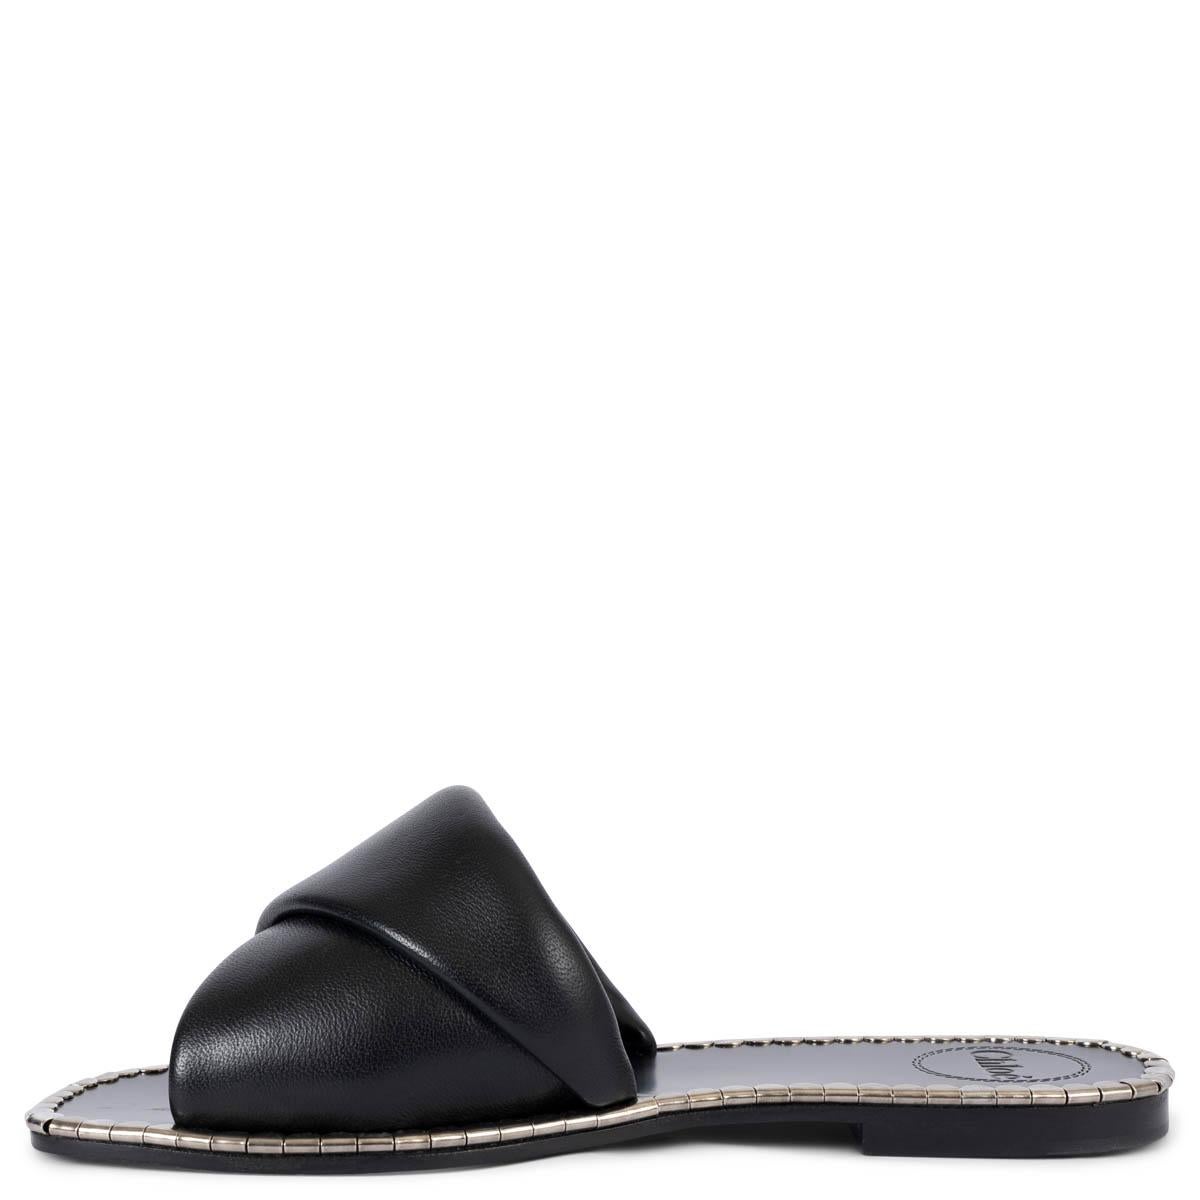 CHLOE cuir noir IDOL Slides Sandales Chaussures 37 Pour femmes en vente